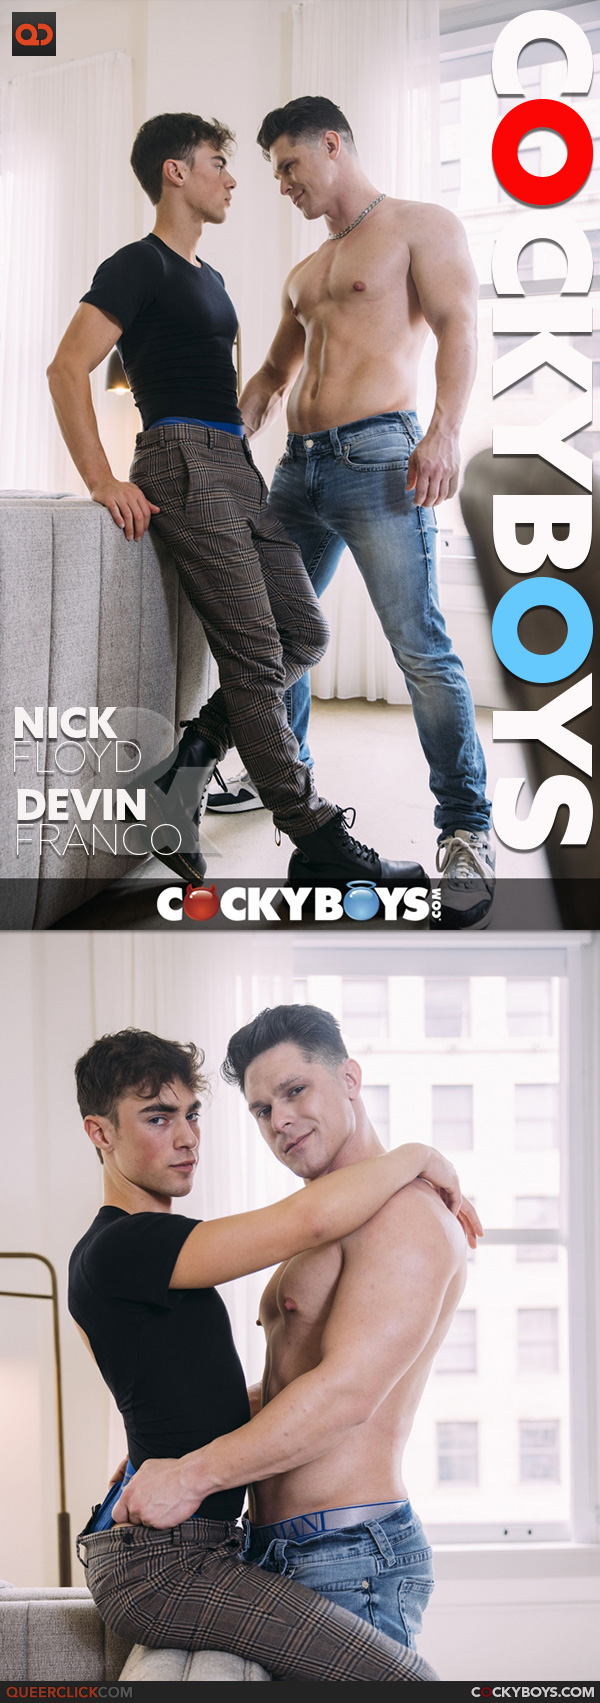 CockyBoys: Nick Floyd and Devin Franco